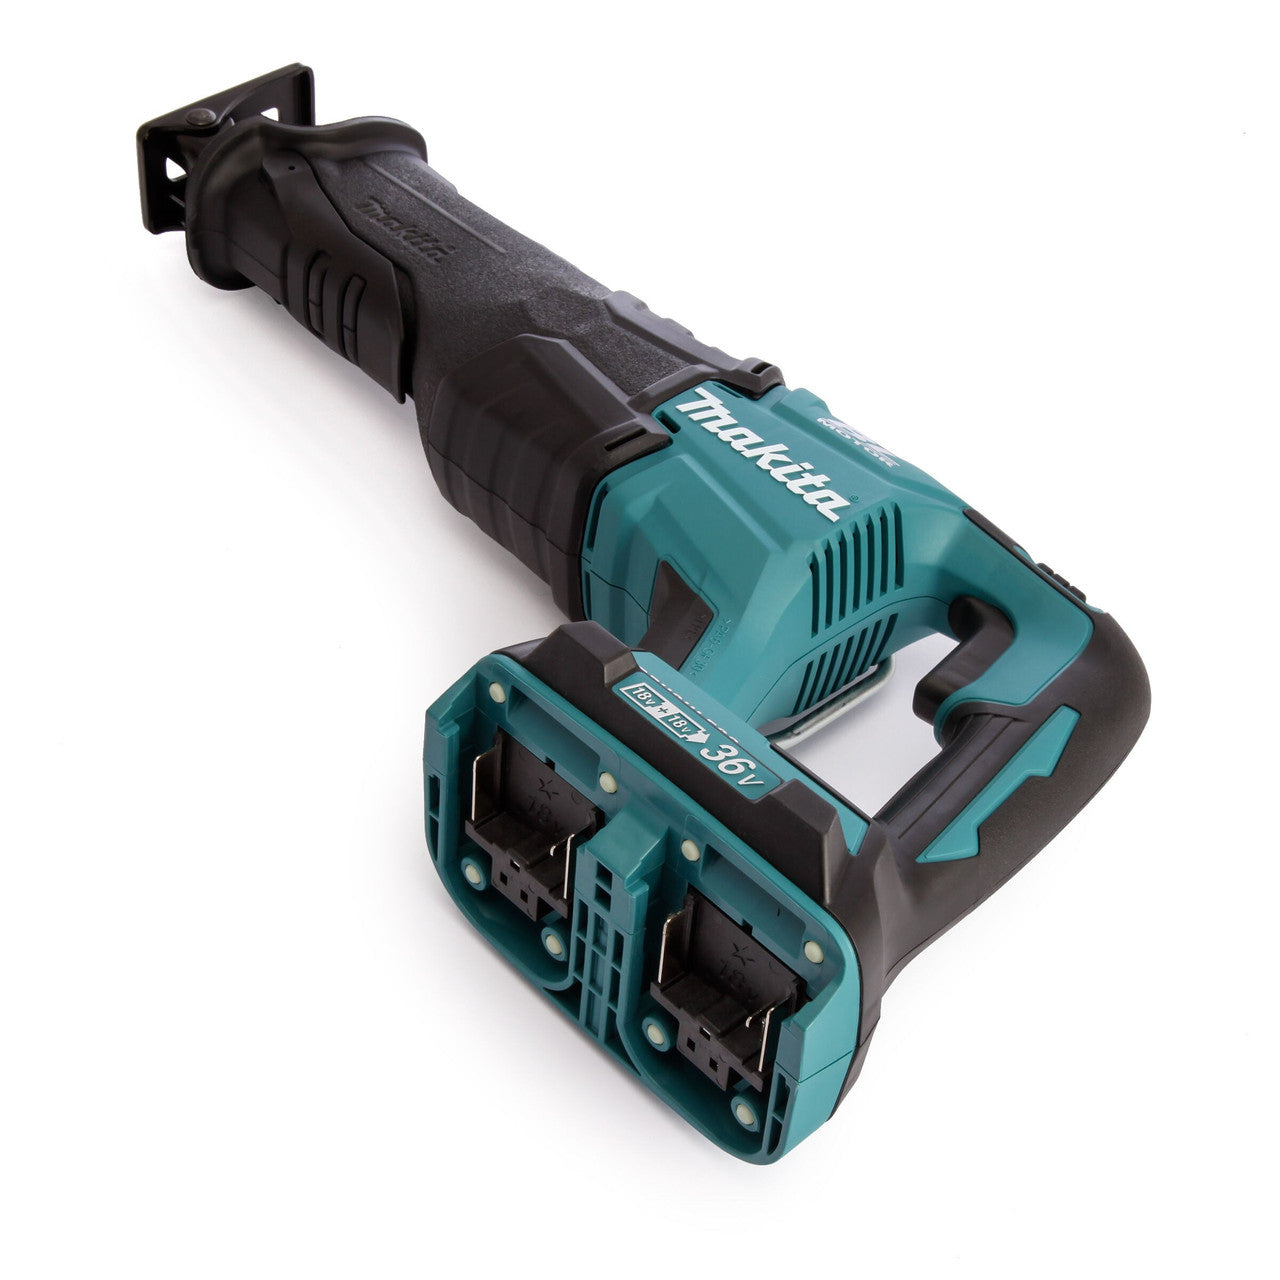 Makita DJR360ZK 36V Brushless Reciprocating Saw (Body Only) - Accepts 2 x 18V Batteries